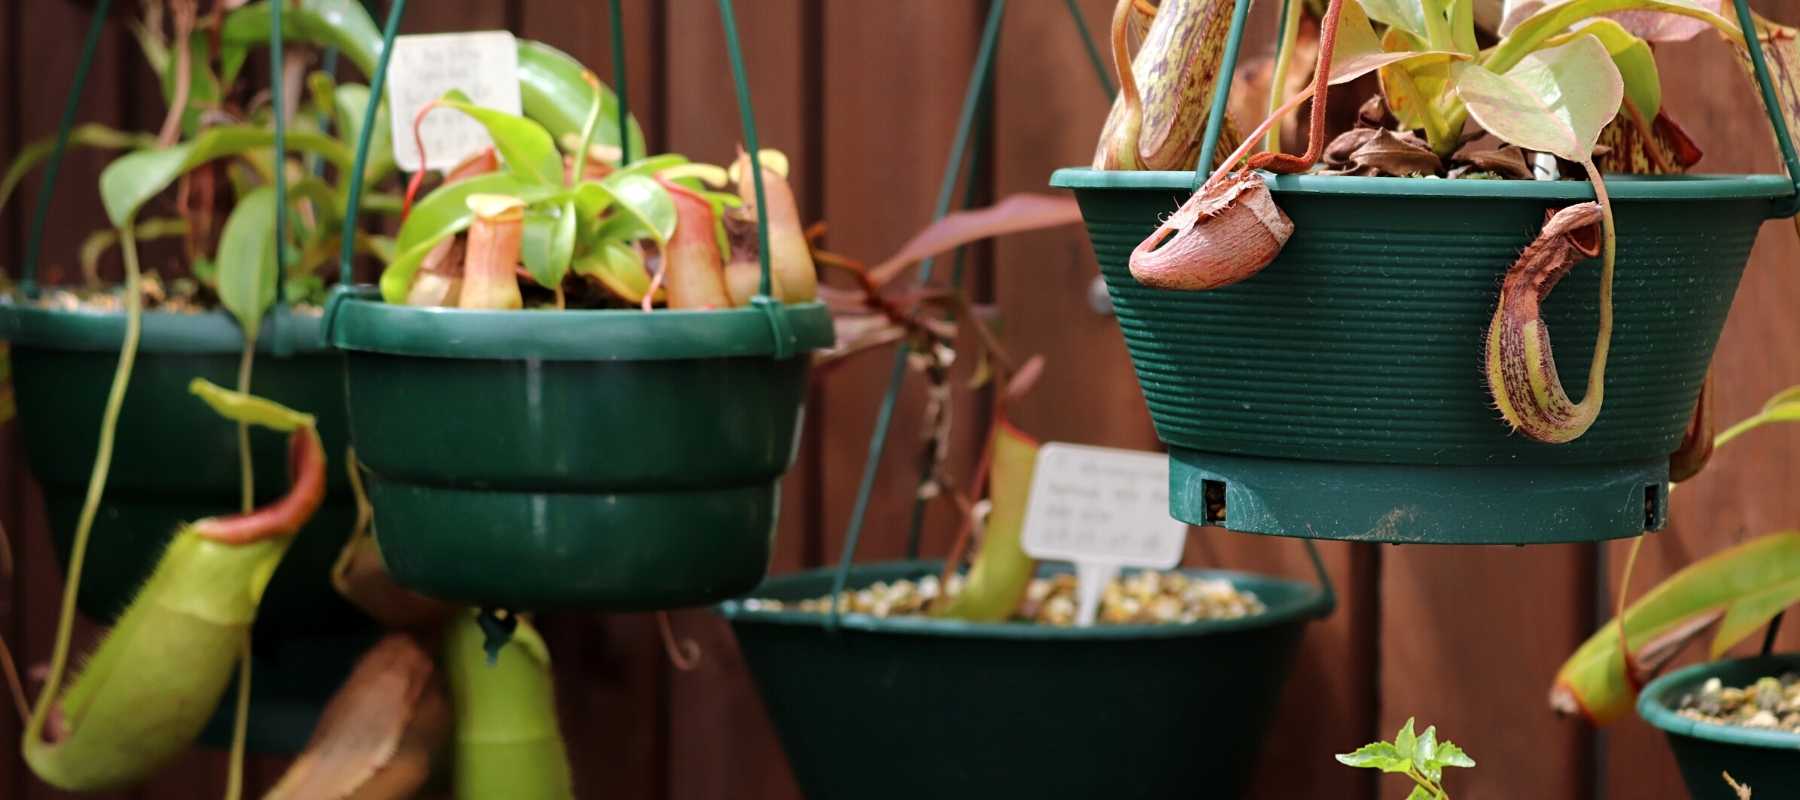 hanging baskets for carnivorous plants